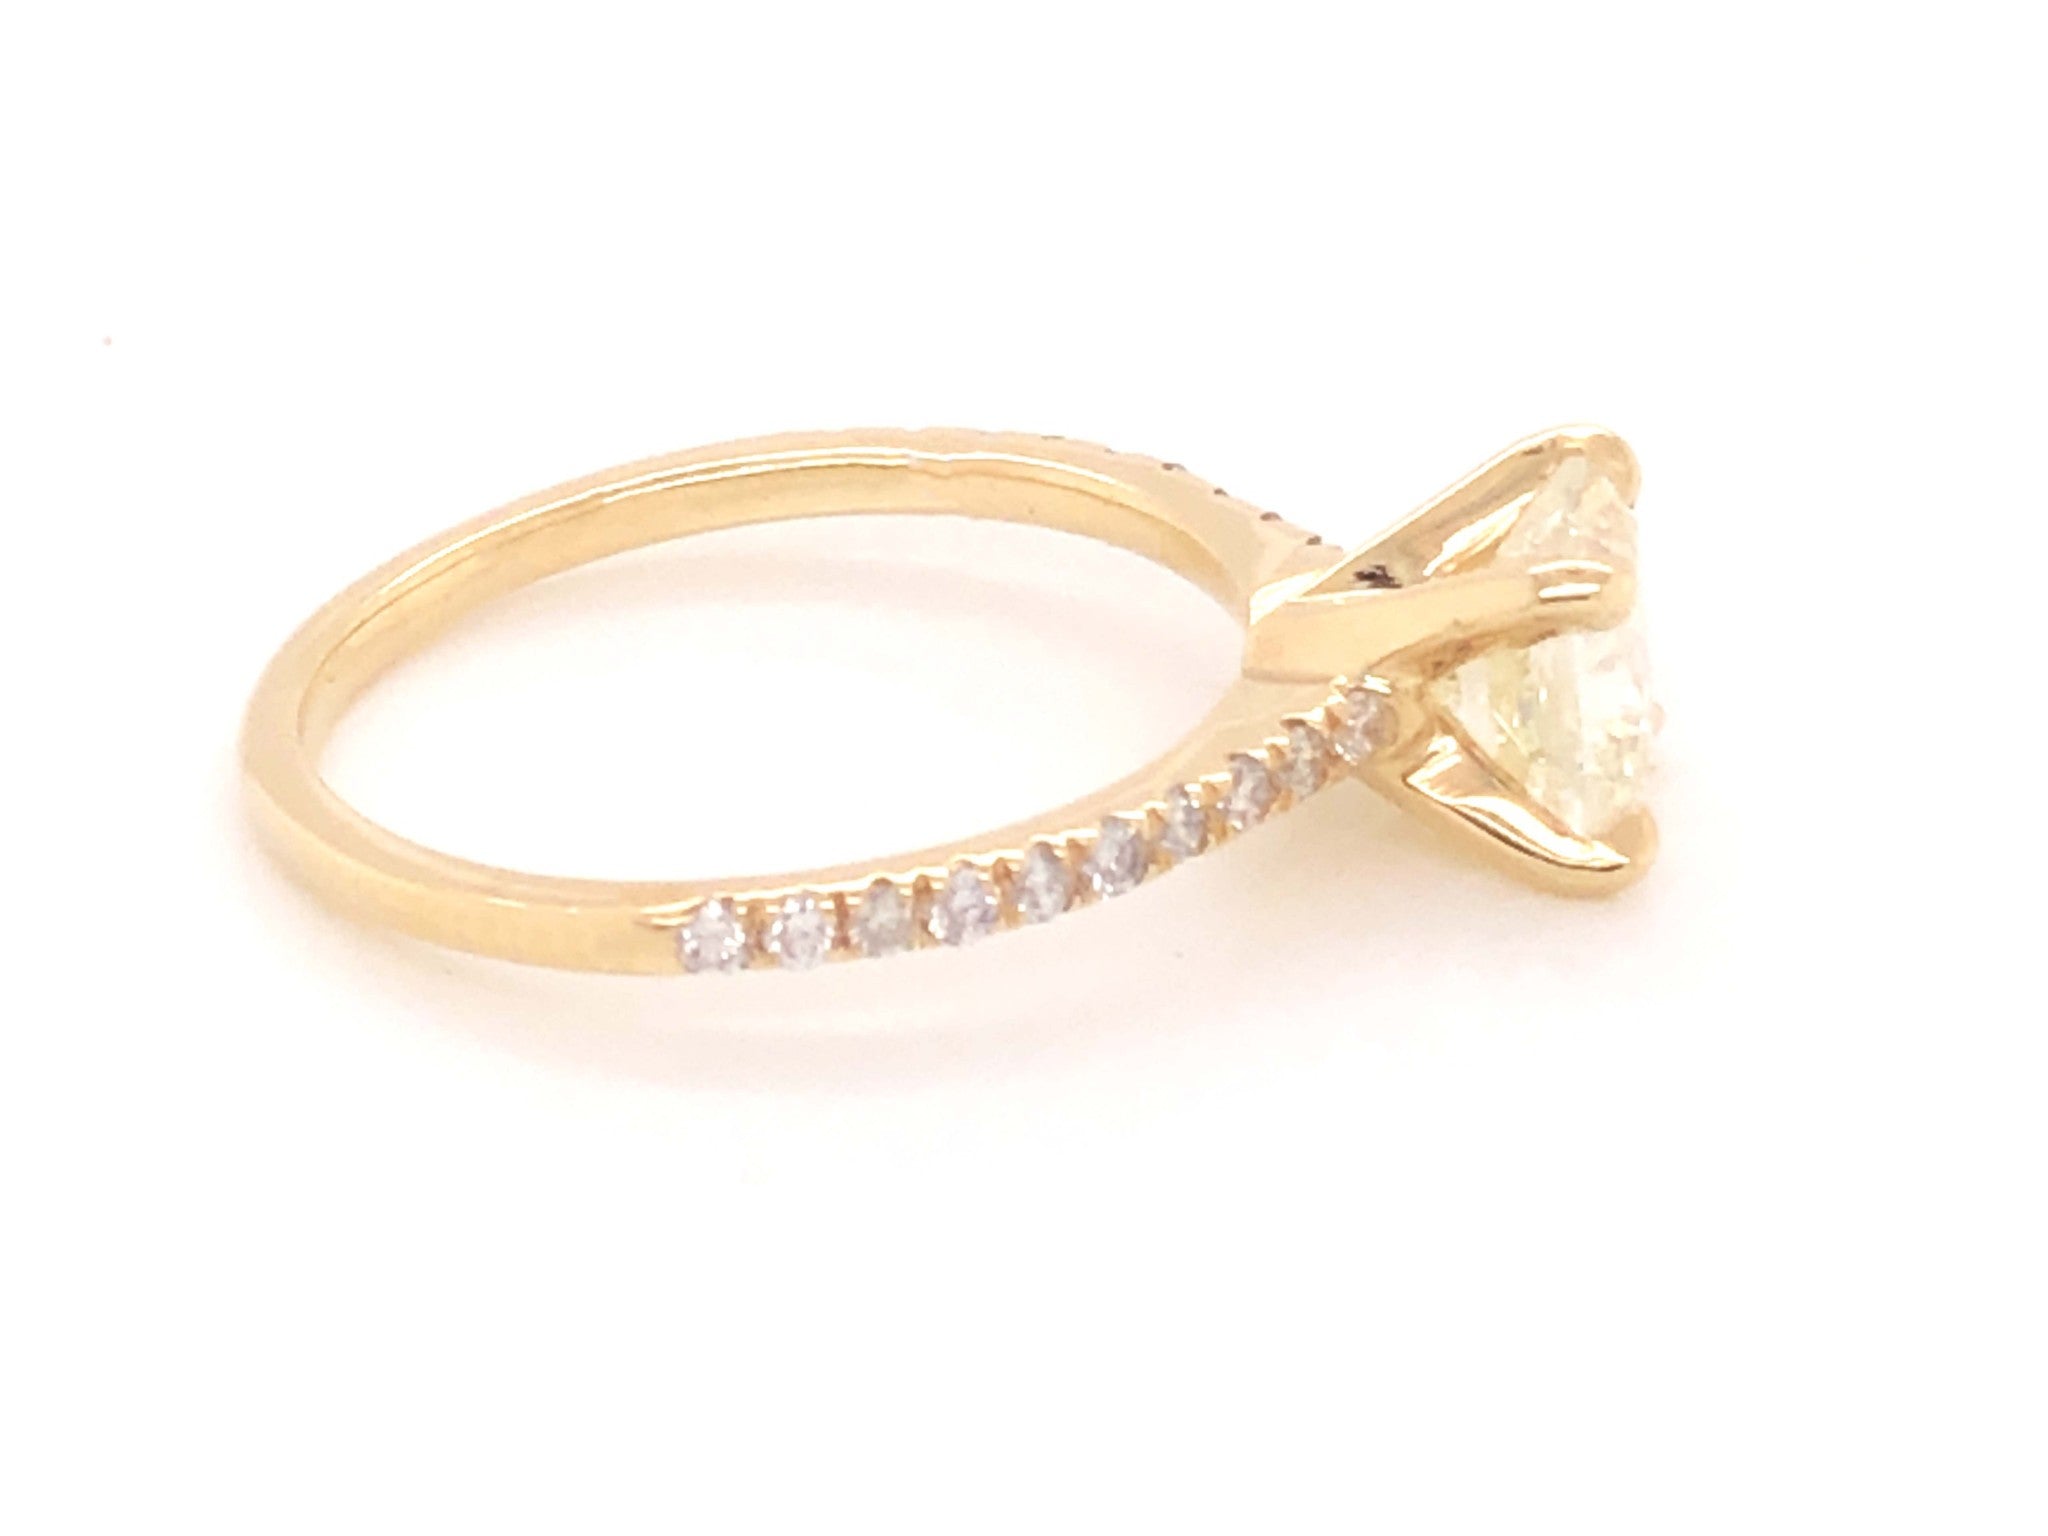 Radiant Cut 1.23 Carat Center Stone Diamond Engagement Ring - 14k Yellow Gold